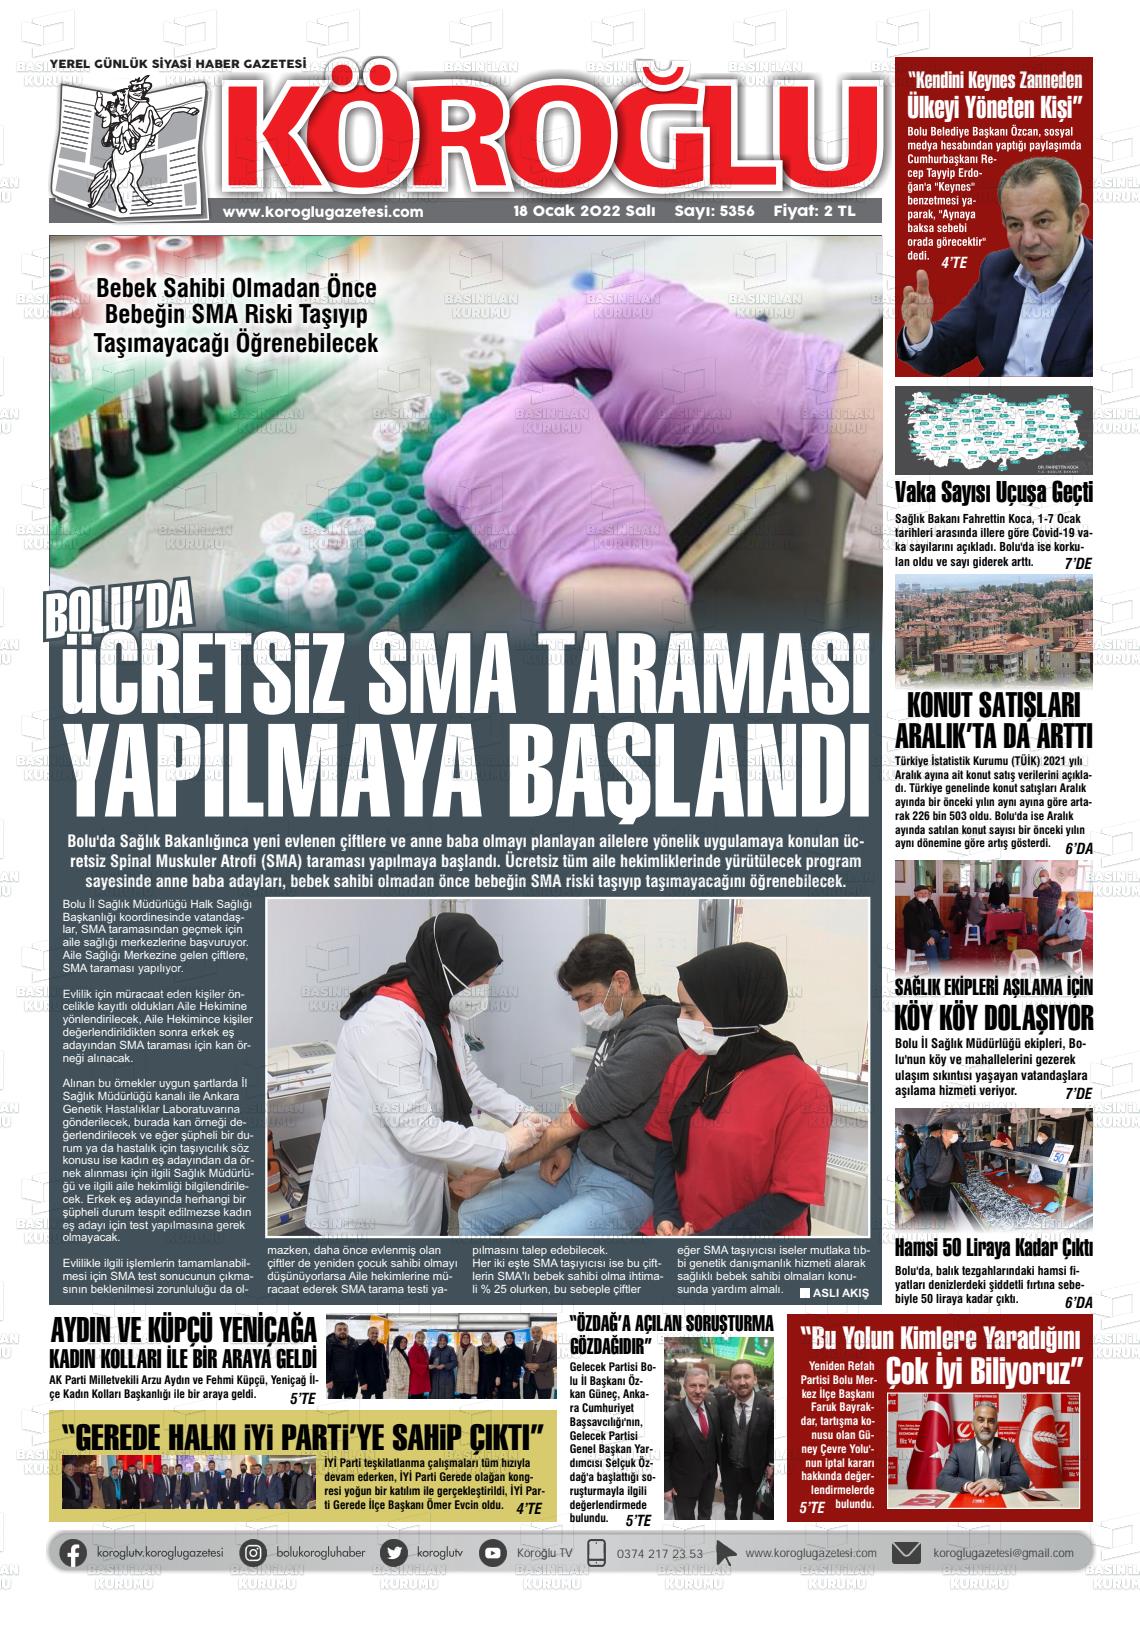 18 Ocak 2022 Köroğlu Gazete Manşeti